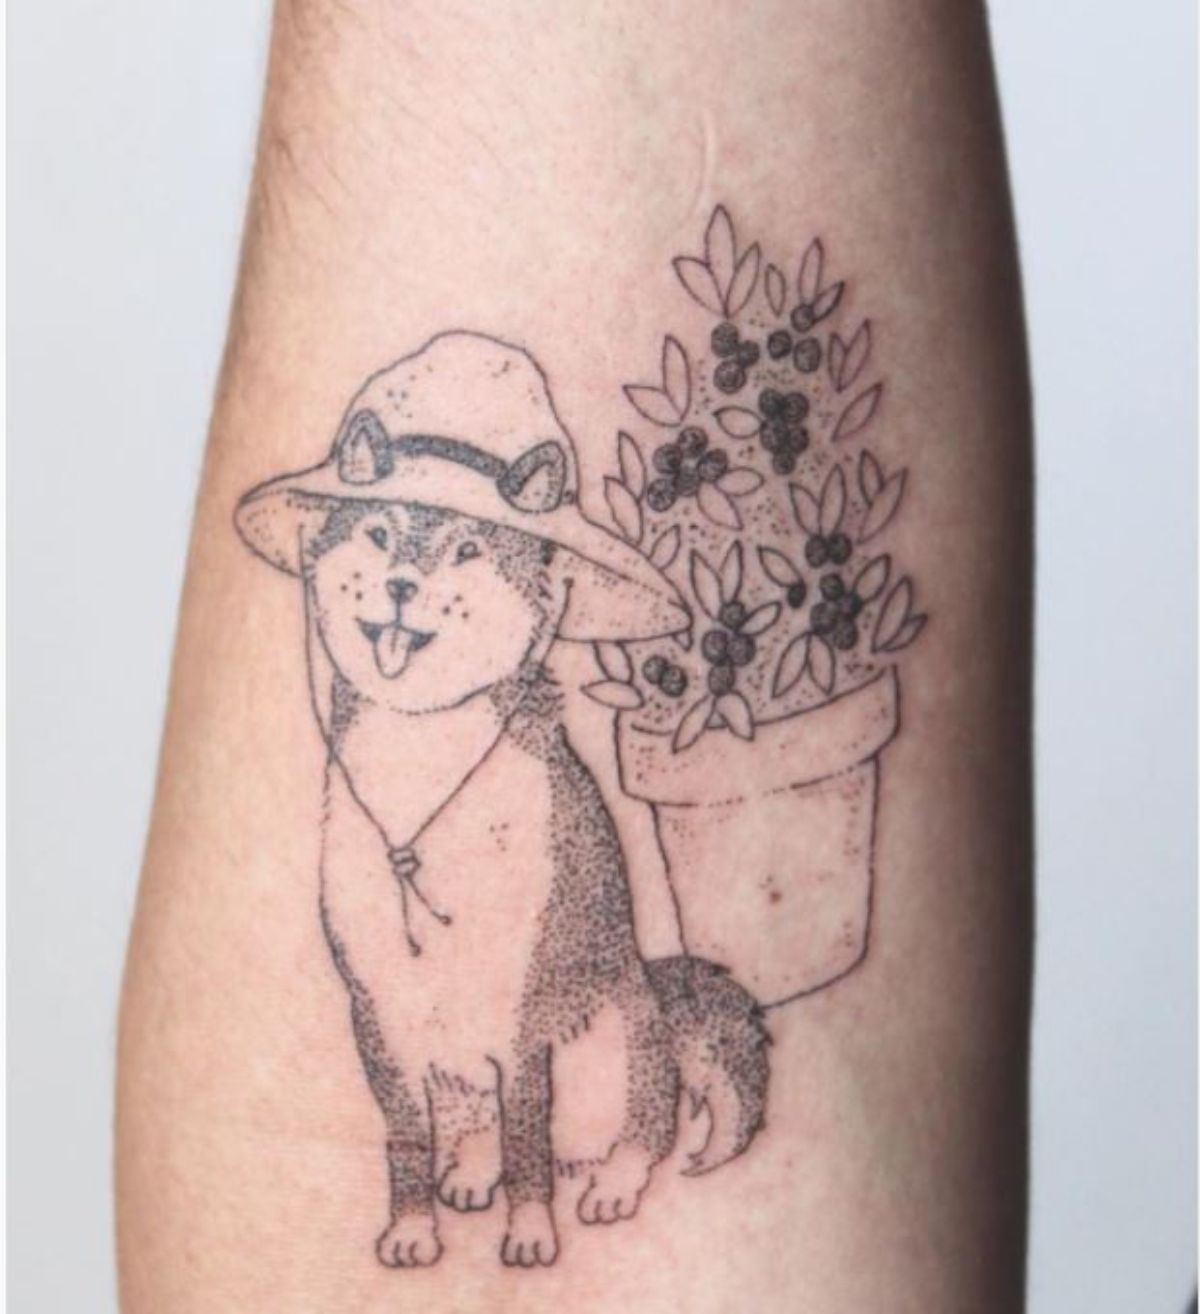 Shiba Inu farmer tattoo on the leg